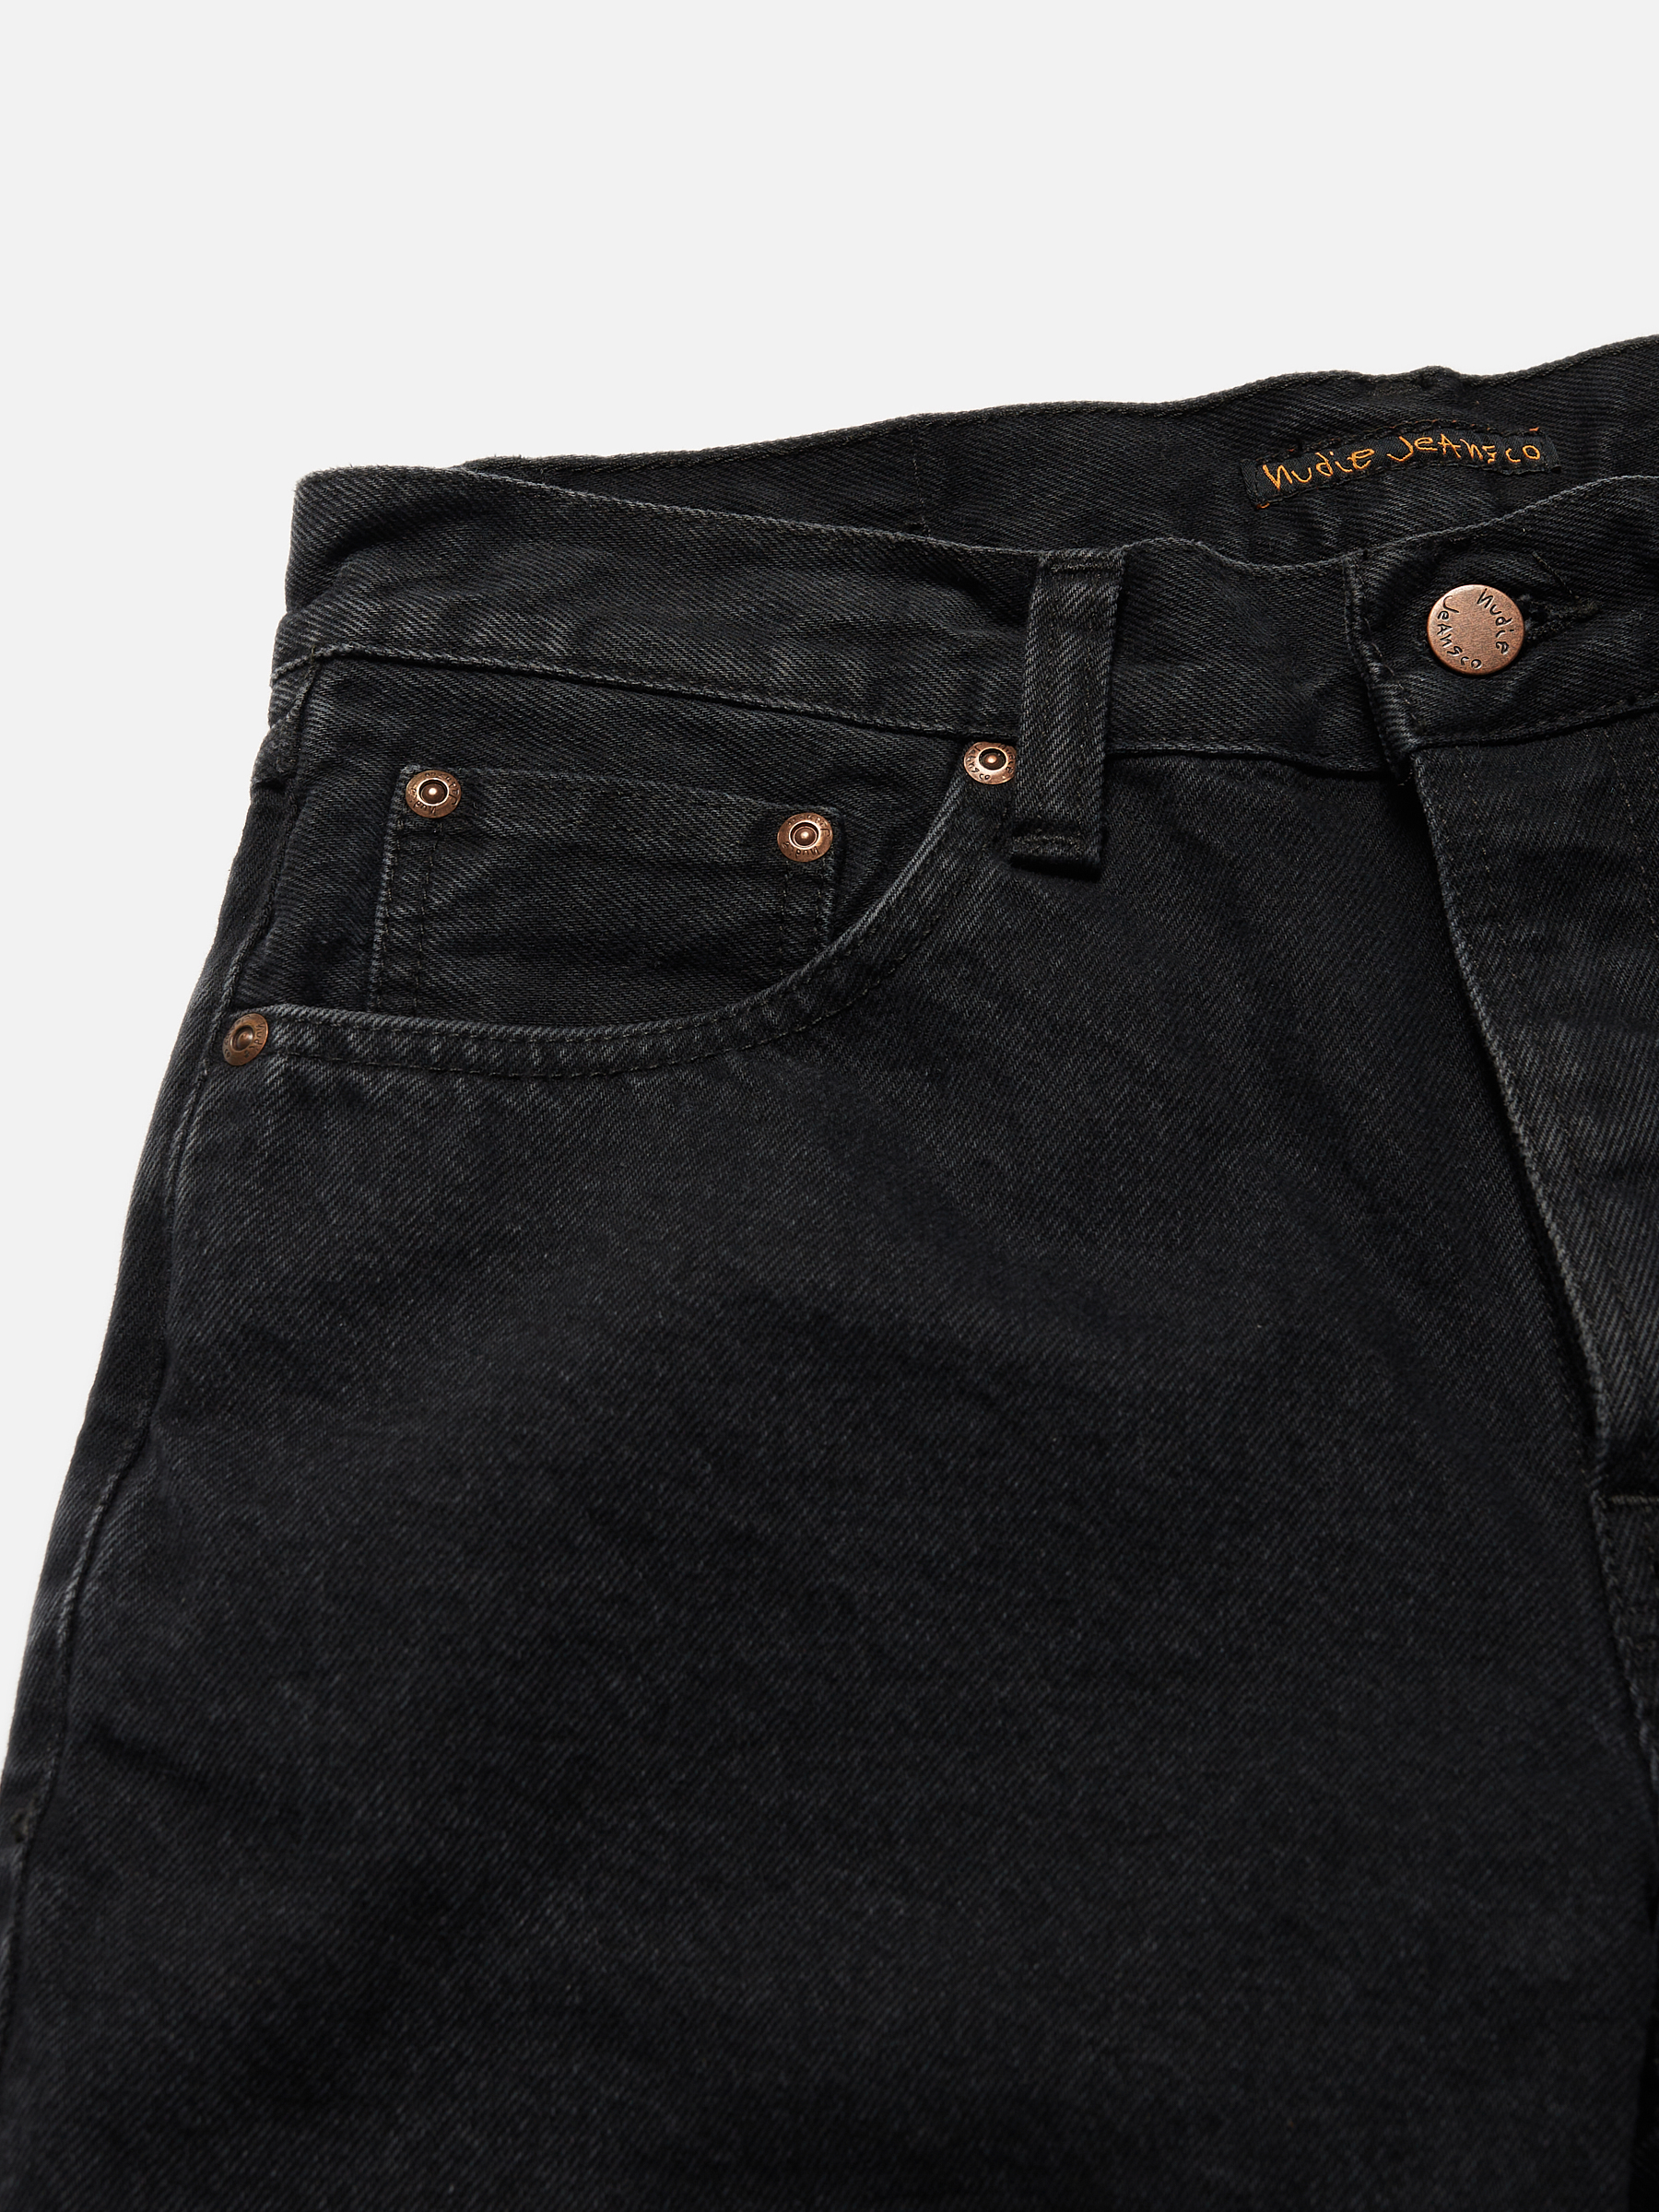 Jeans-Shorts Seth - Black Stone